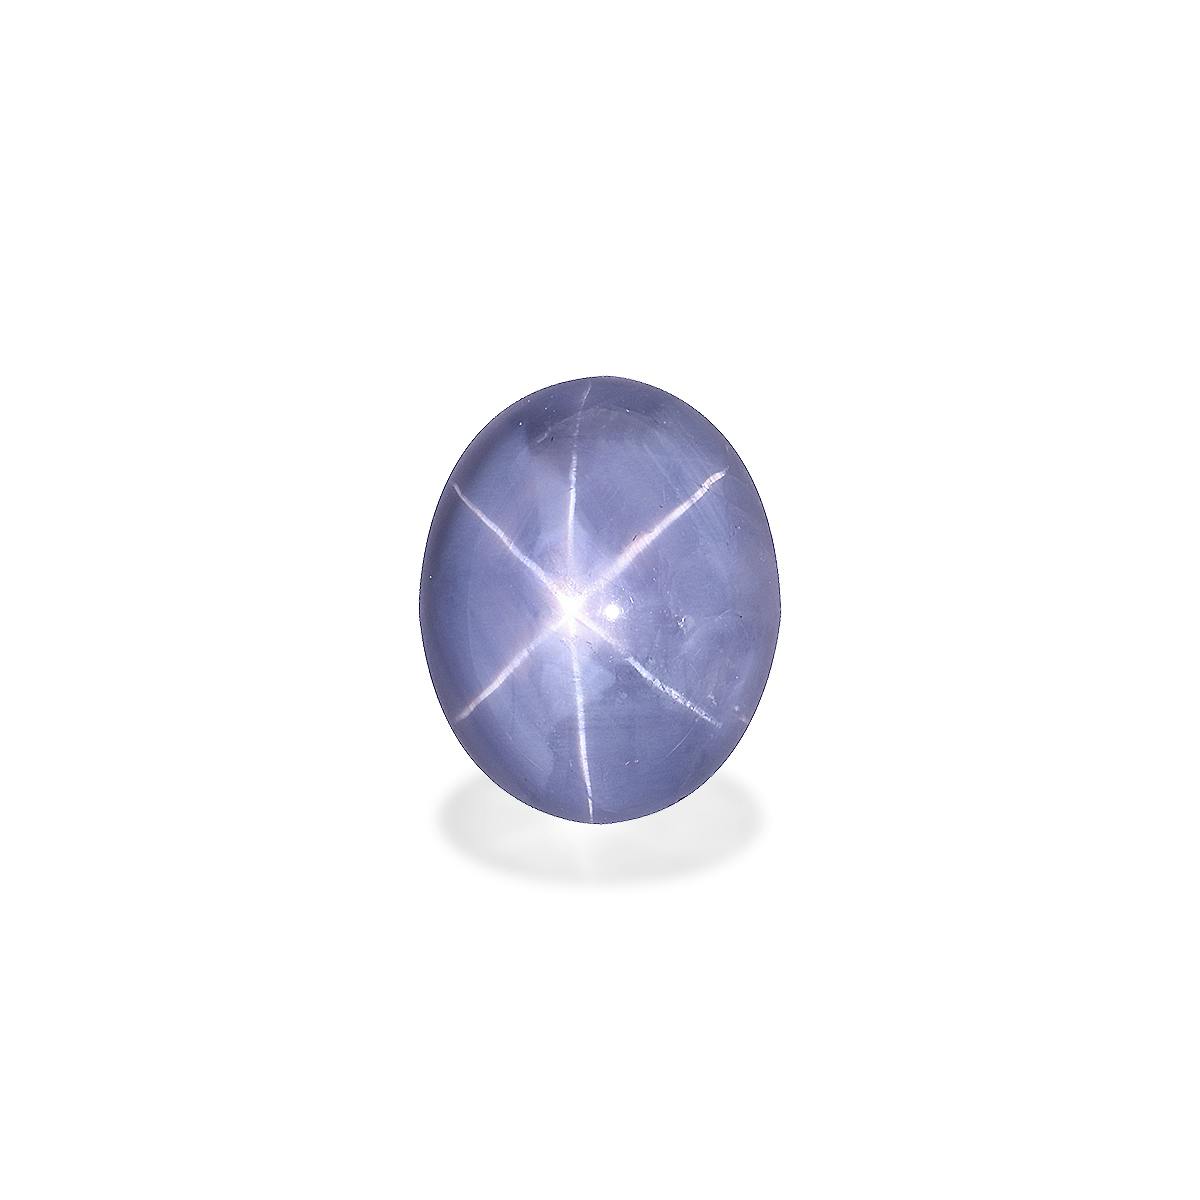 Buy Star Sapphire - Natural Blue Star Asterism Certified Gem